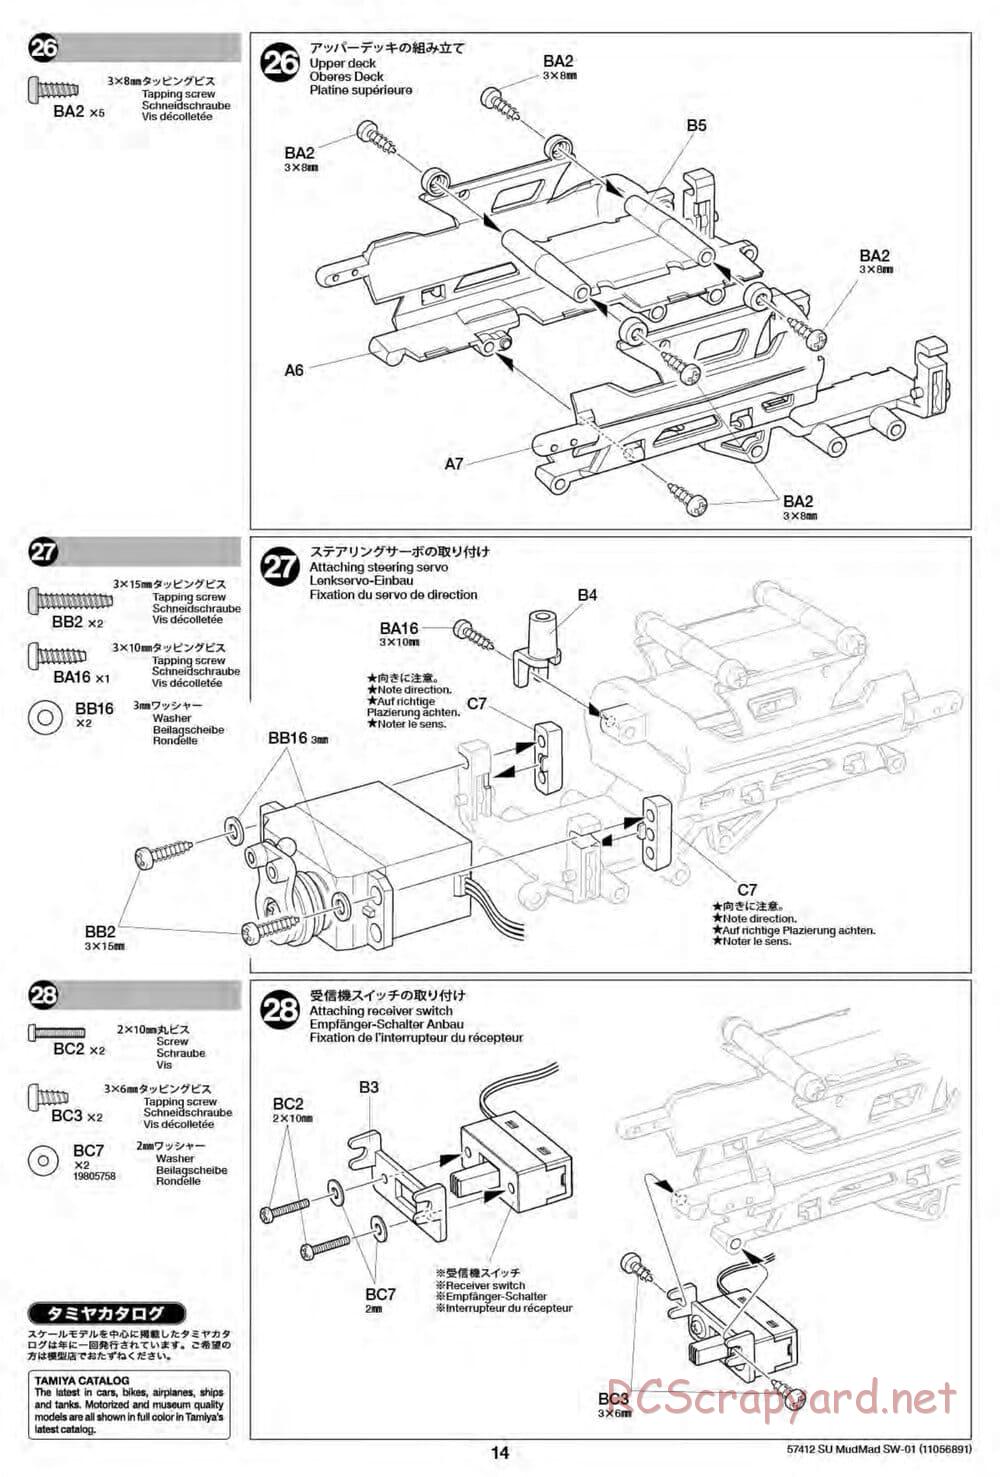 Tamiya - MudMad - SW-01 Chassis - Manual - Page 14